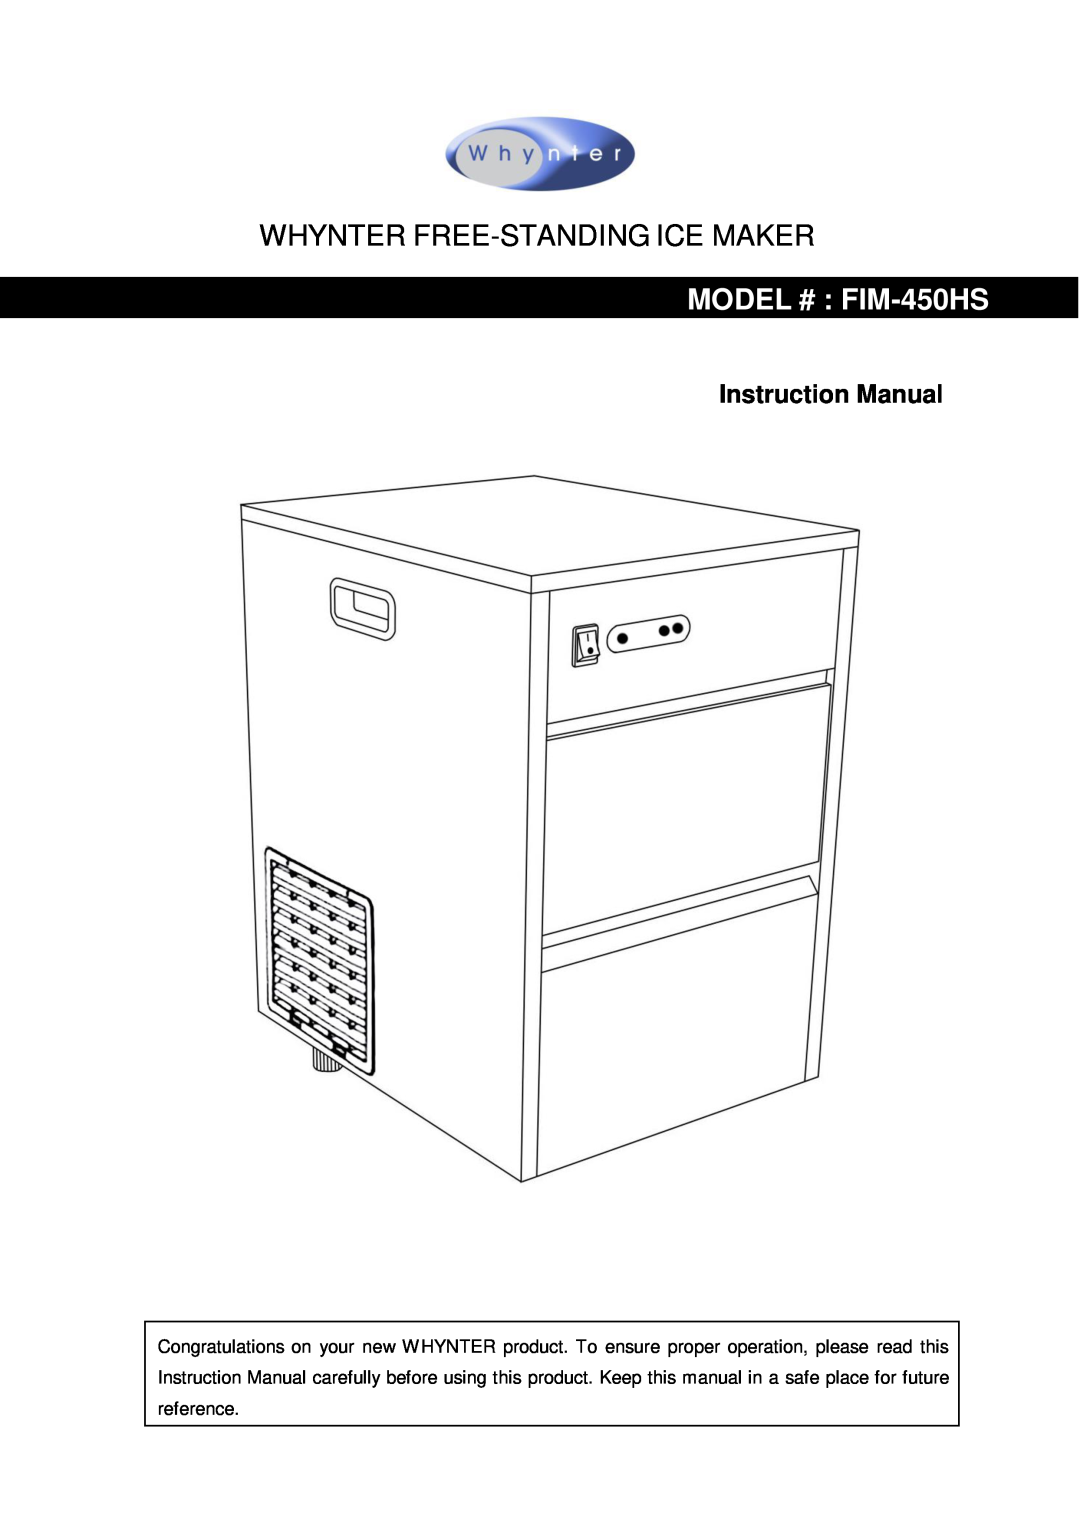 Whynter instruction manual Whynter Free-Standingice Maker, MODEL # FIM-450HS 